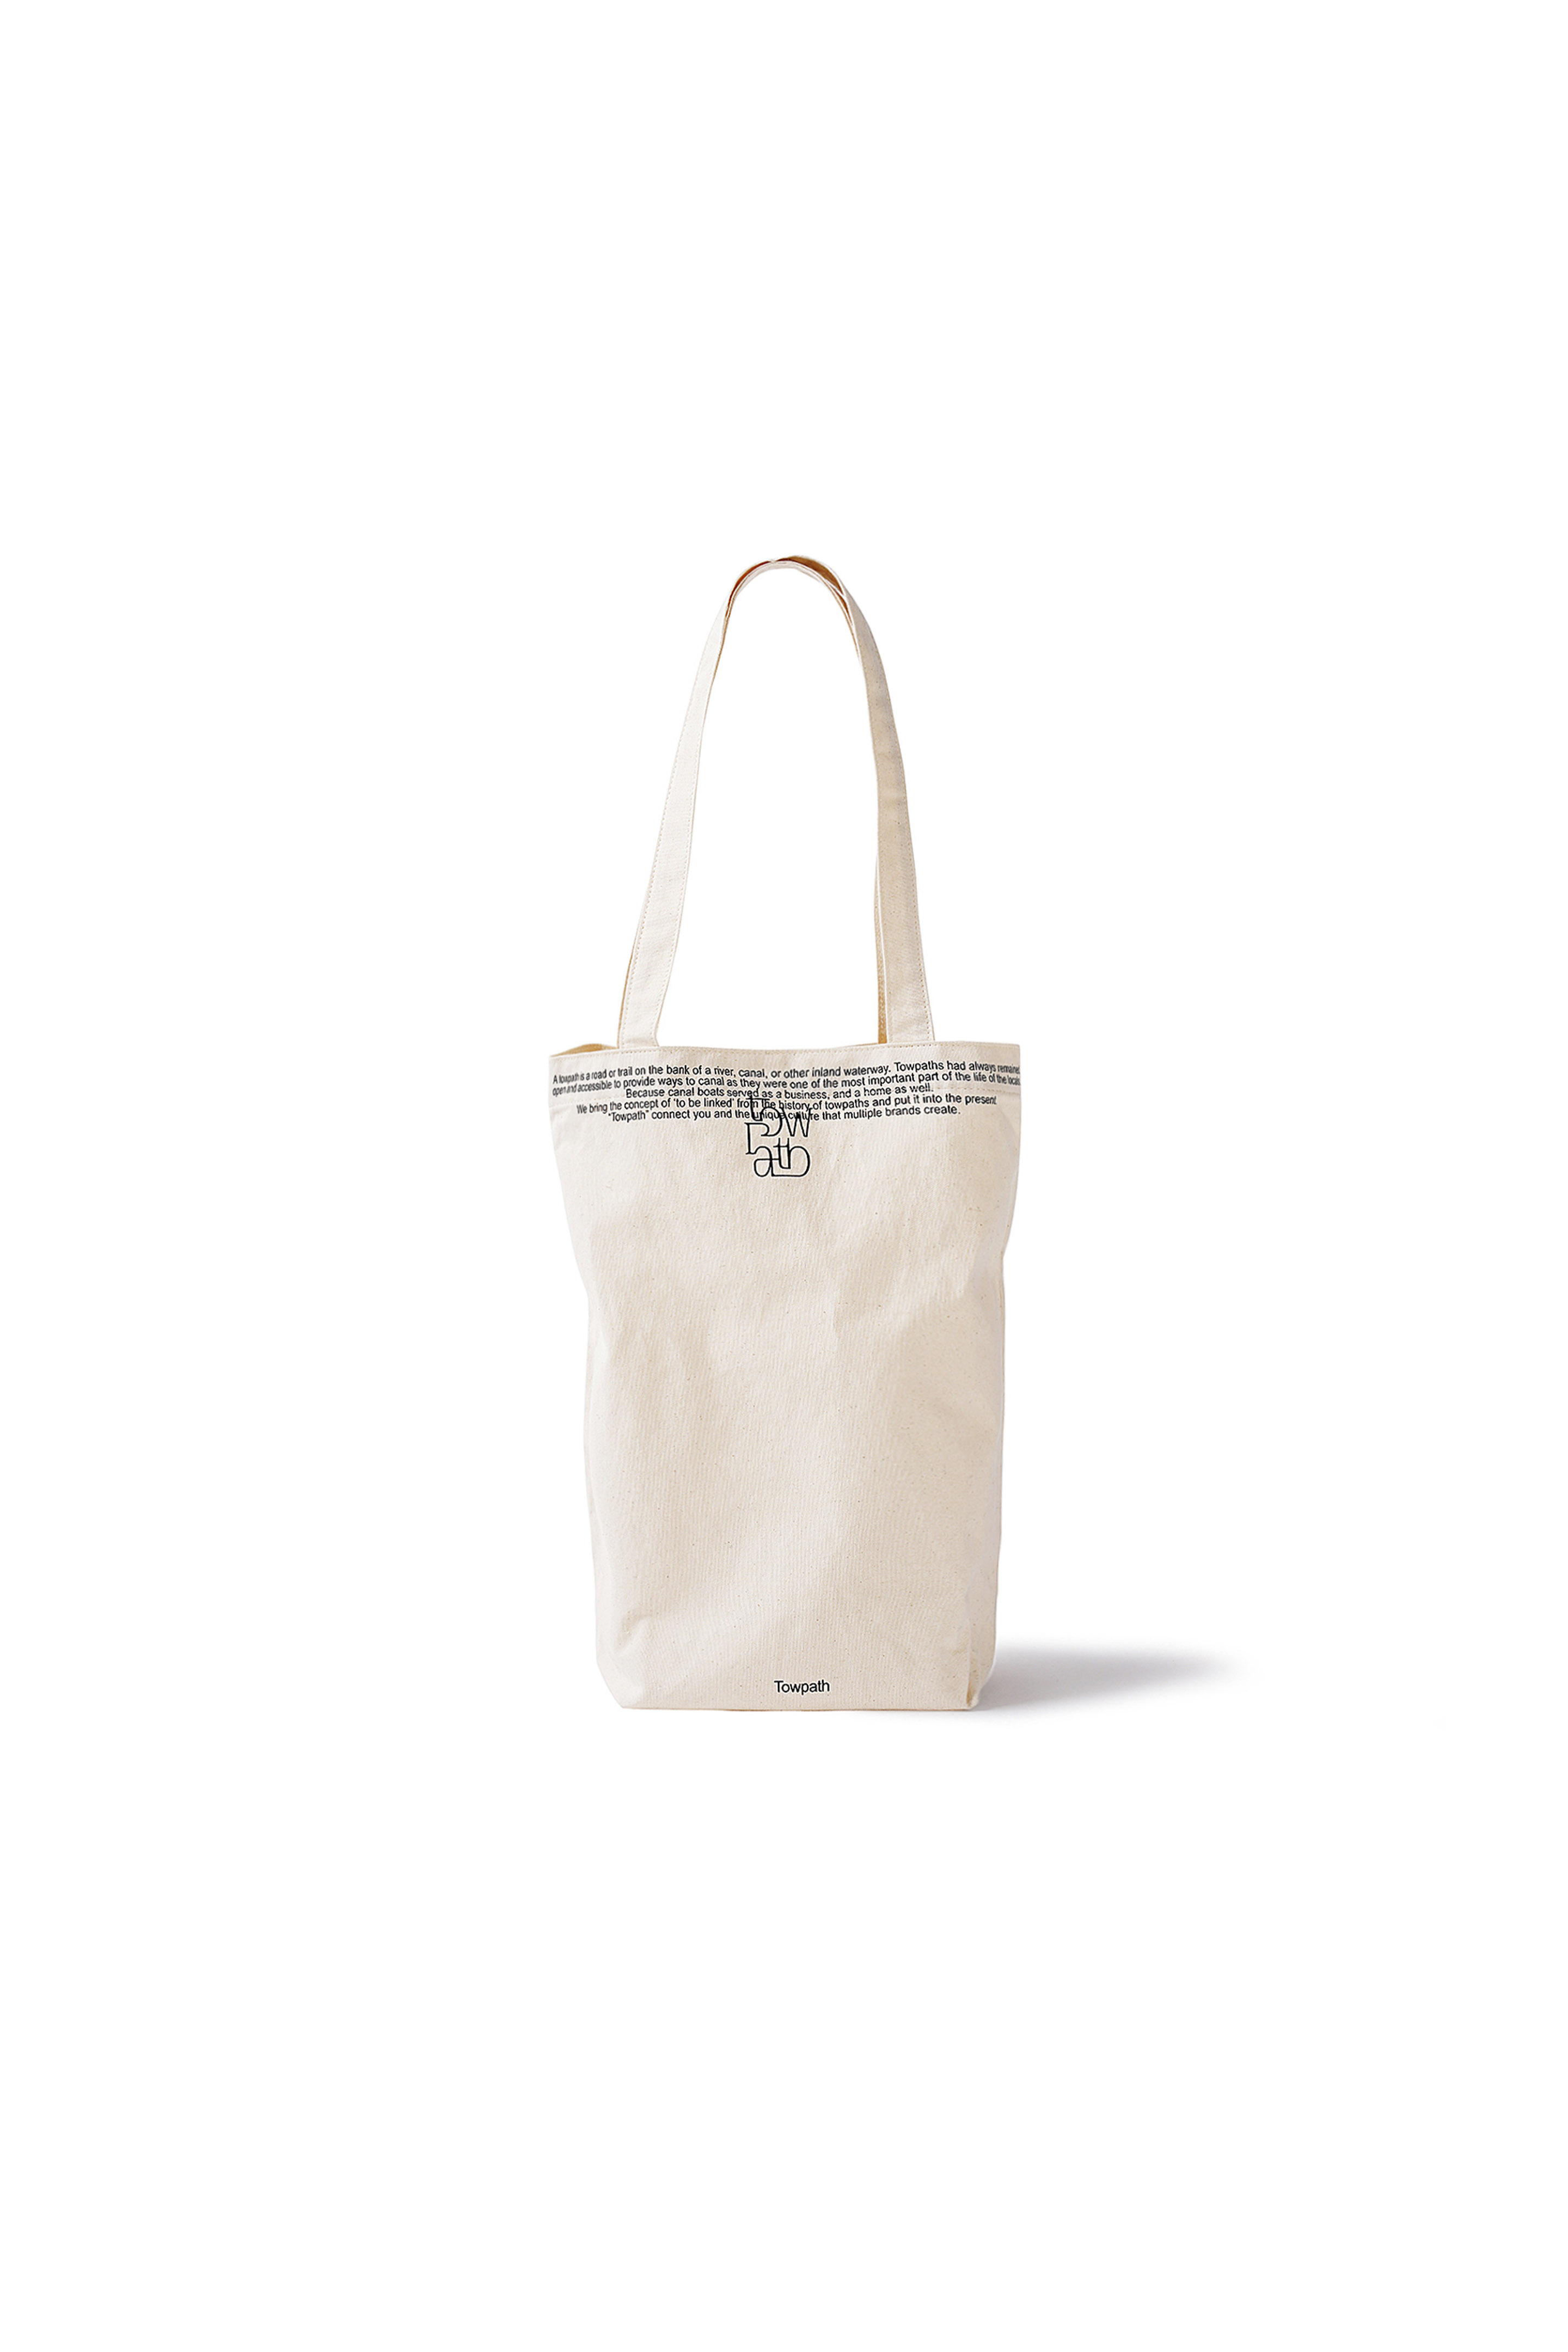 Towpath 008 Shopper Bag - Small